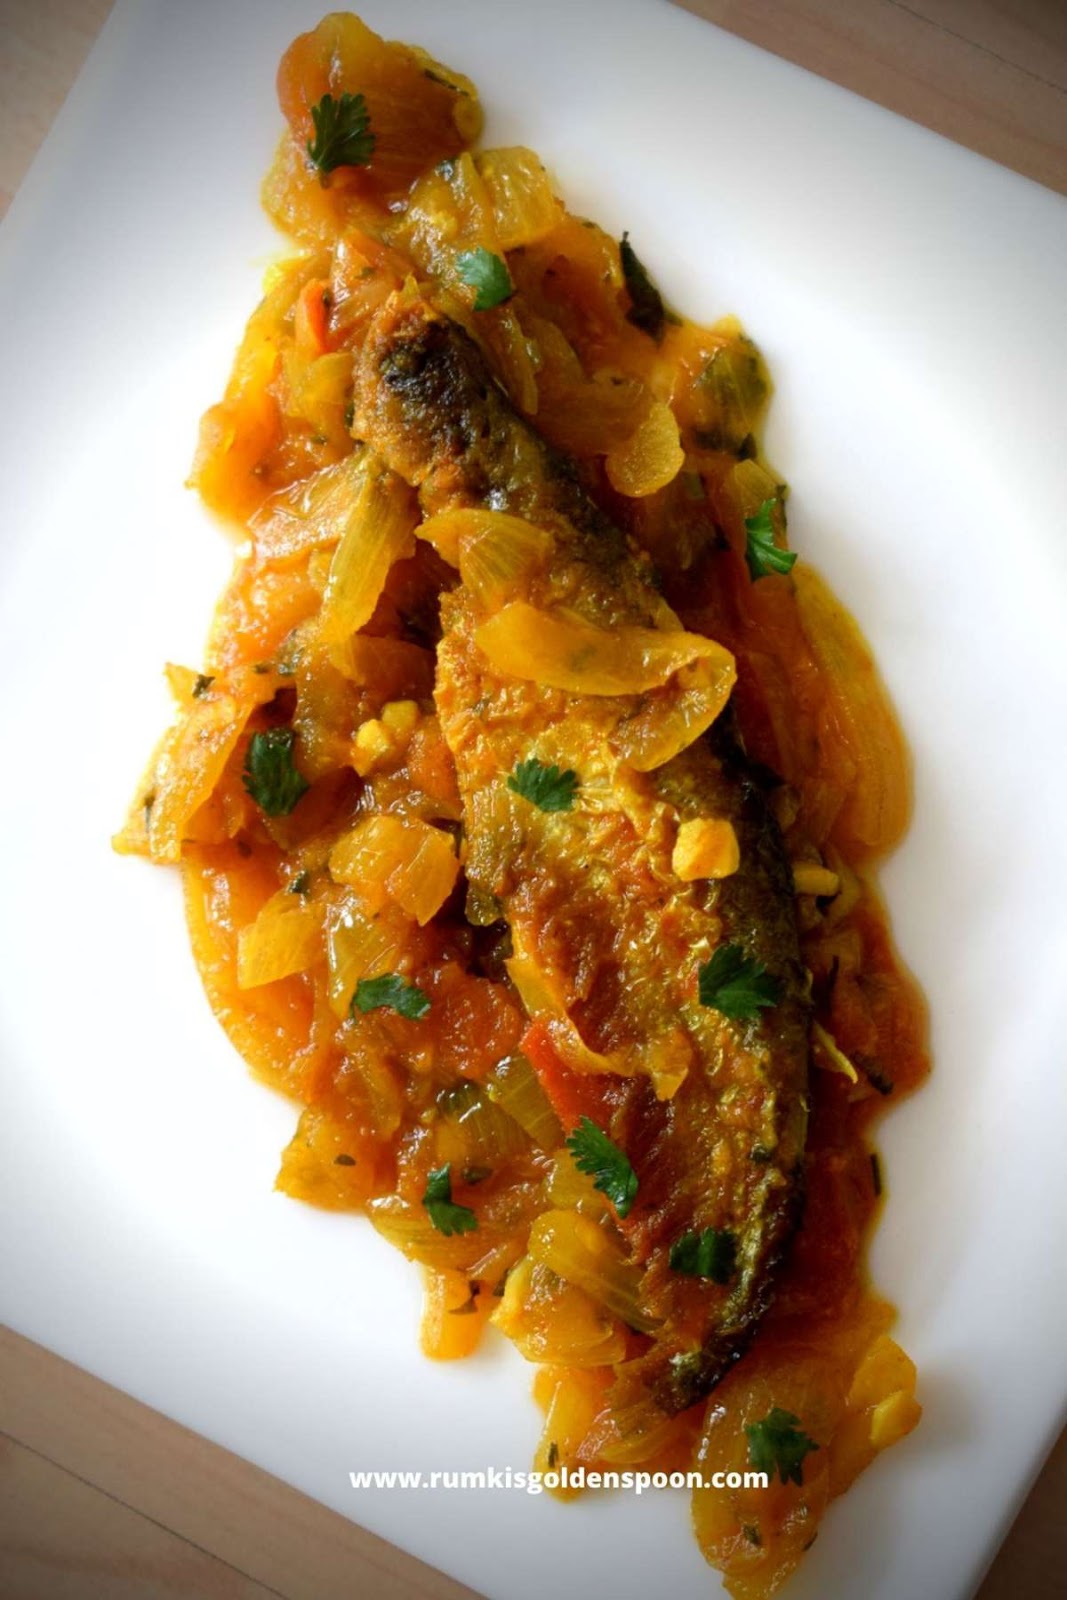 Pabda fish, tan Pabda fish recipe, Pabda fish recipes, Pabda fish curry recipe, bengali fish curry recipe, fish curry recipe, fish curries, Pabda fish curry, Pabda Macher Bhuna, Rumki's Golden Spoon